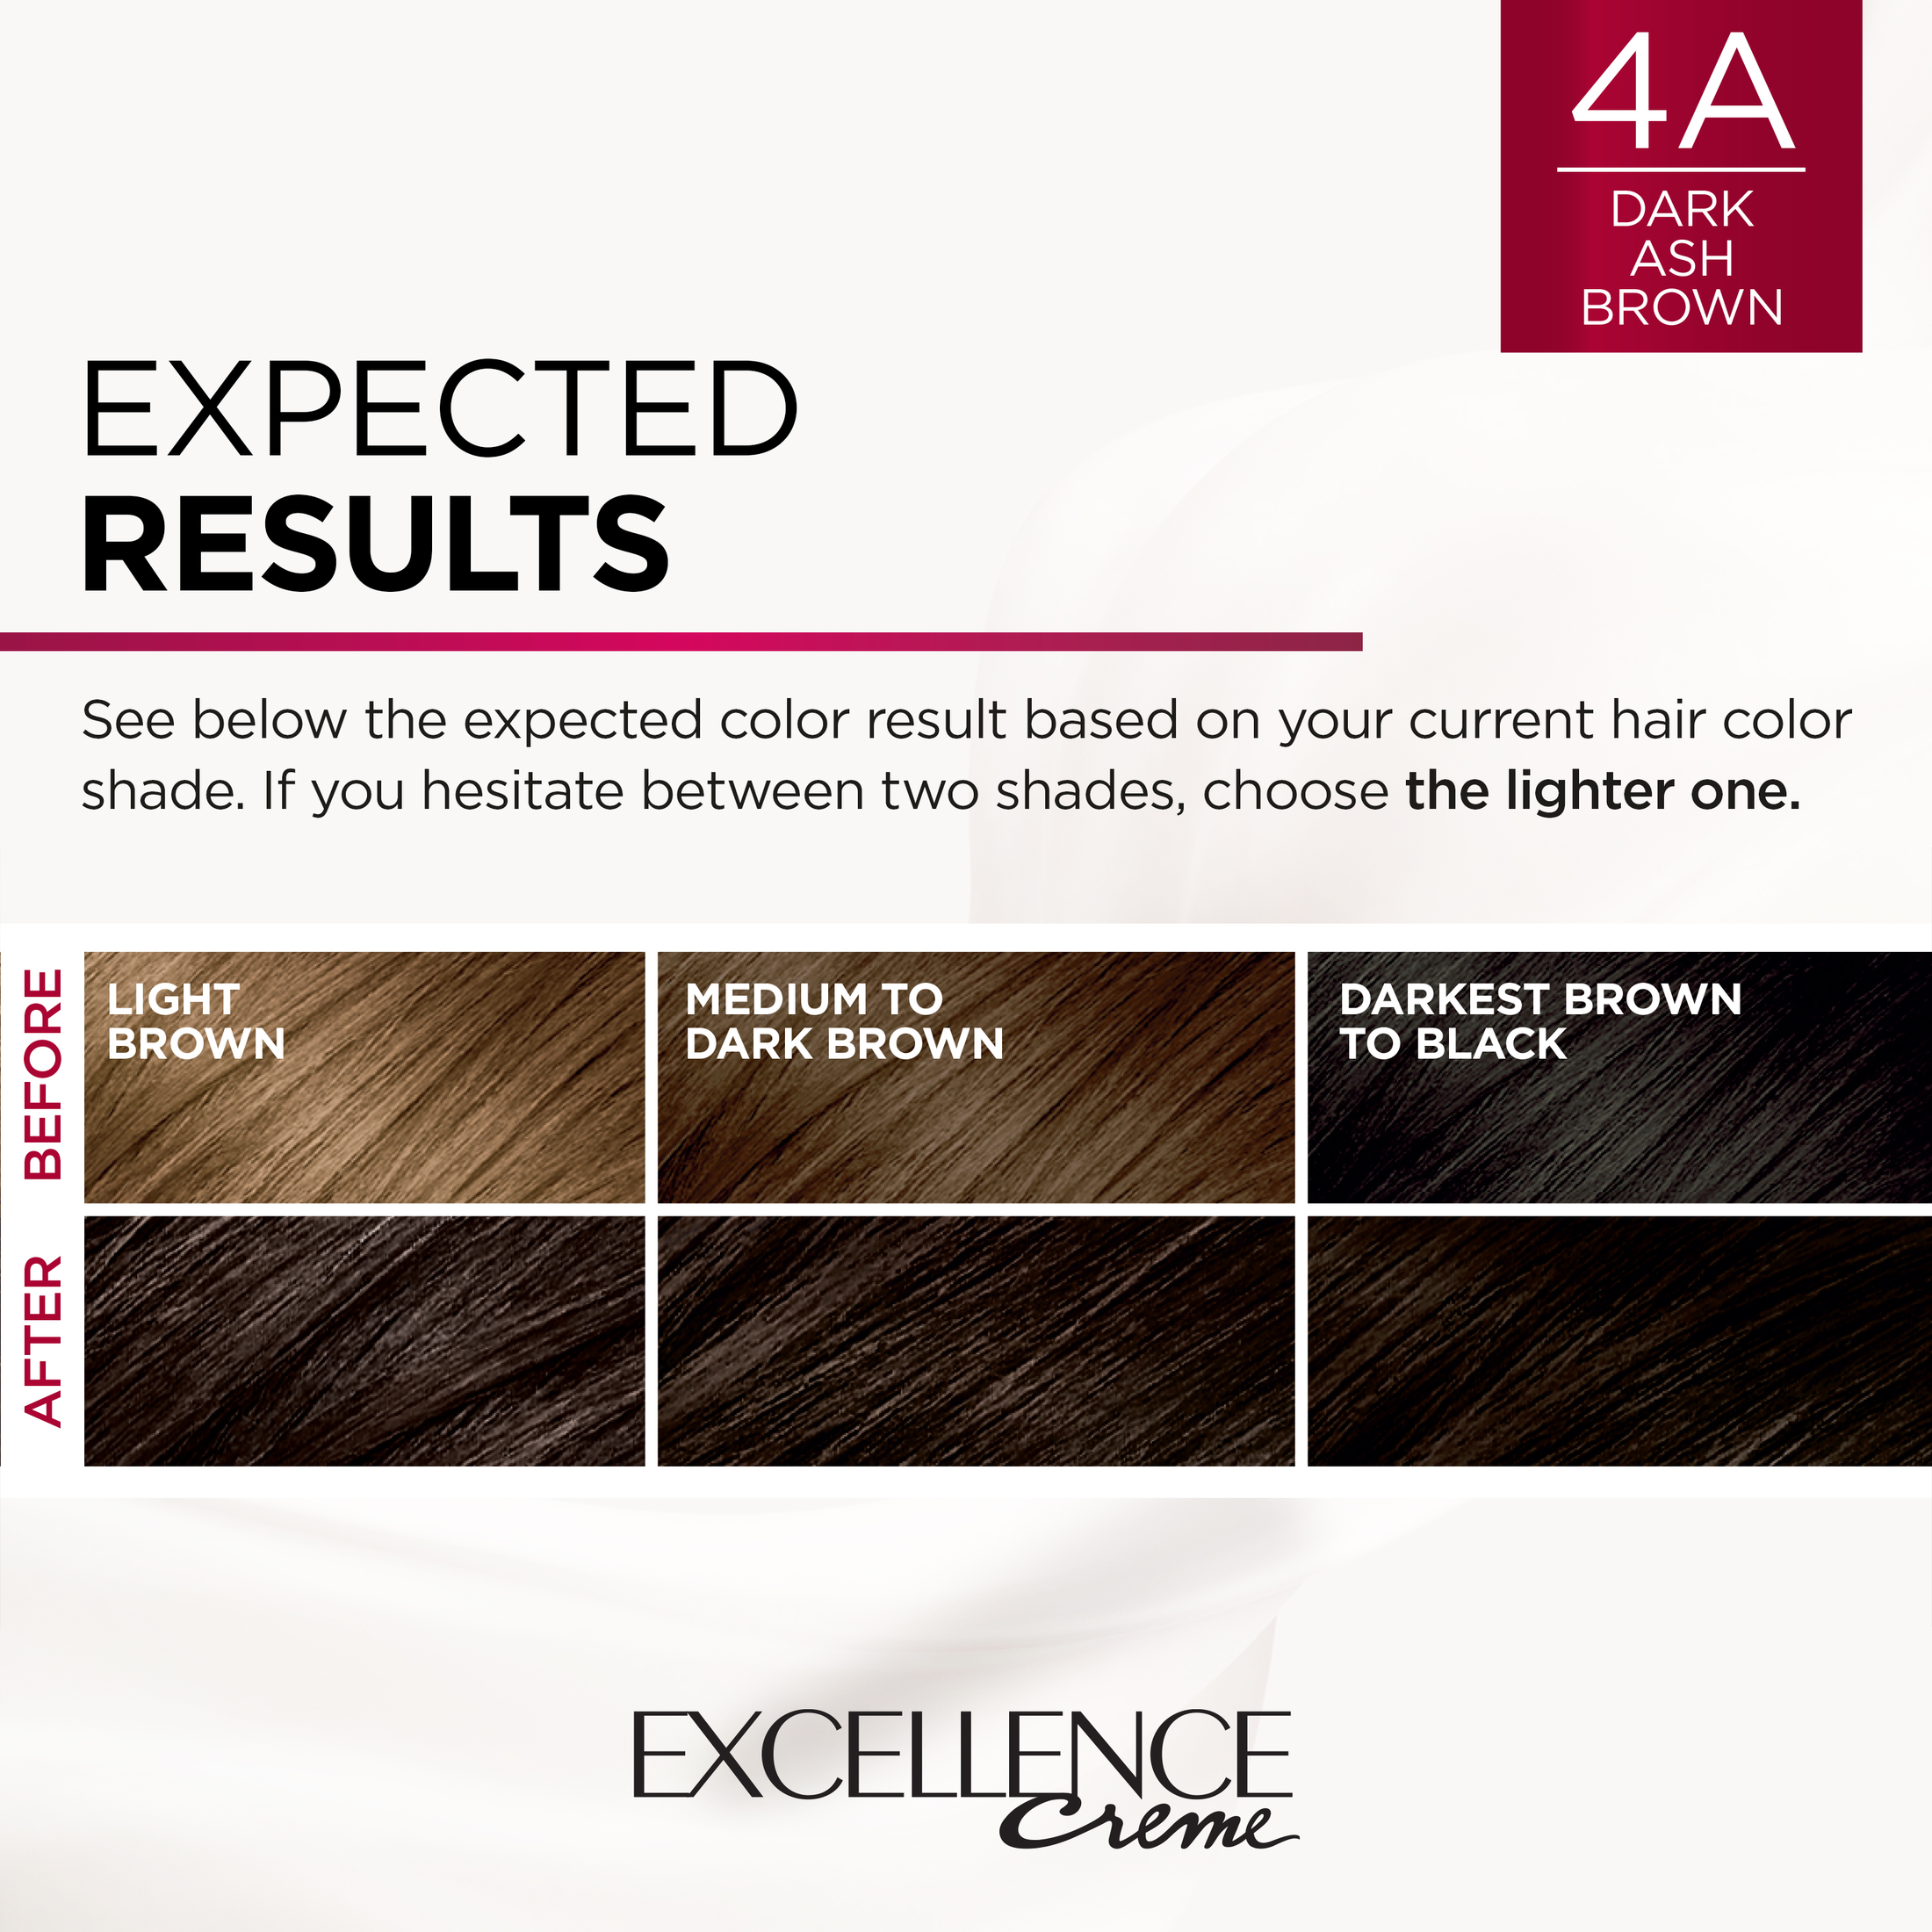 L'Oreal Paris Excellence Creme Permanent Hair Color, 4A Dark Ash Brown - image 5 of 8